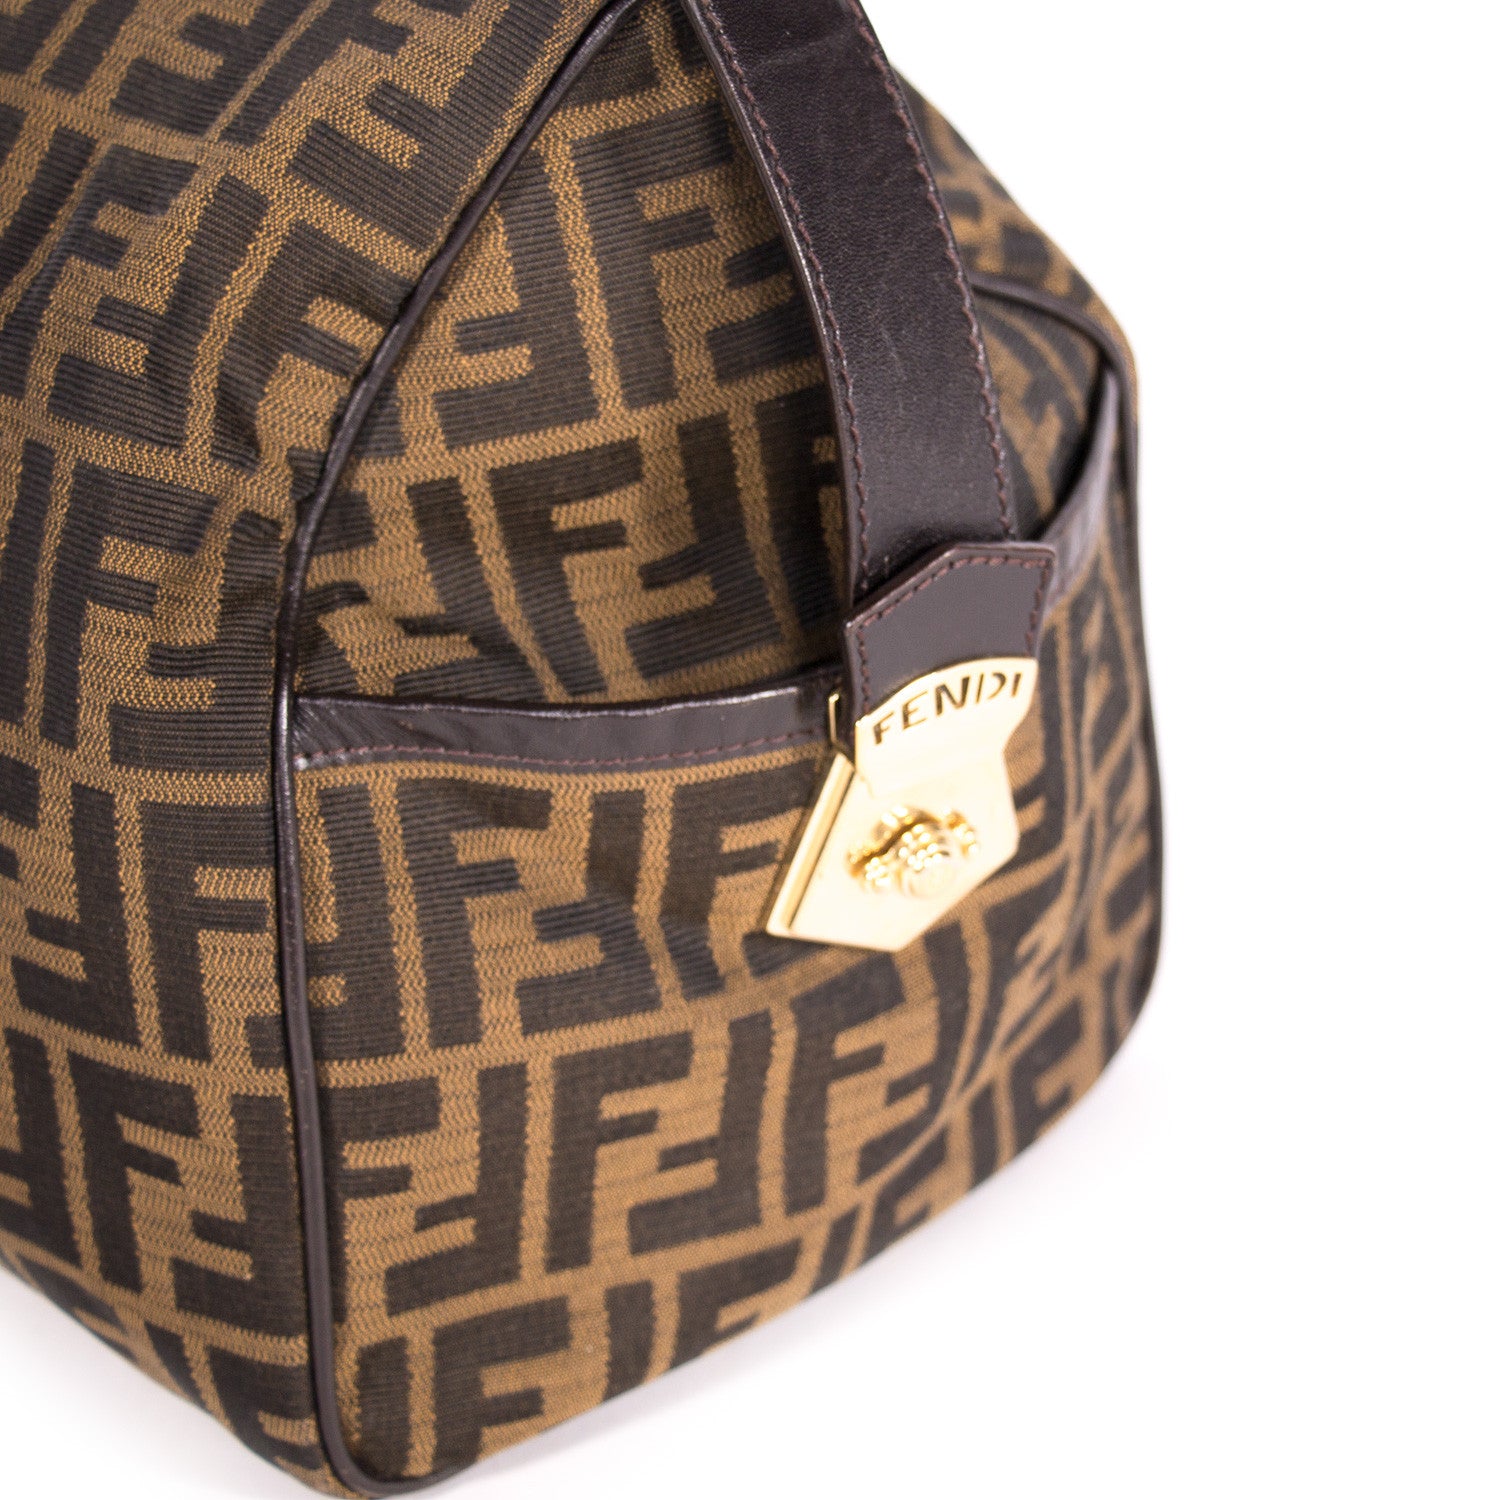 Shop authentic Fendi Zucca Boston Bag at revogue for just USD 475.00